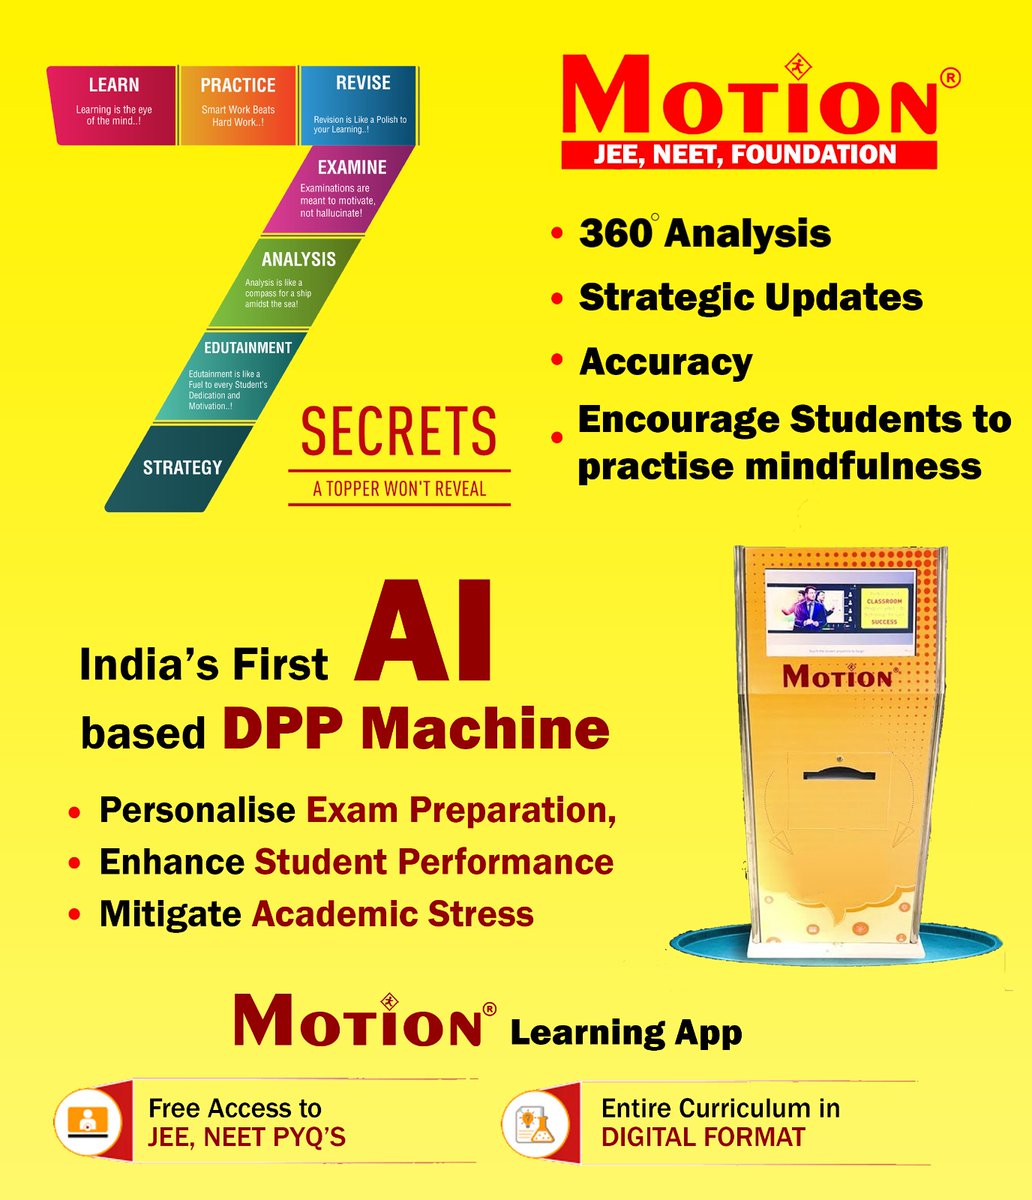 Motion

* 360 Analysis
* Strategic Updates
* Accuracy
* Encourage Students to practise mindfulness

India's First AI based DPP Machine

* Personalise Exam Preparation
* Enhance Student Performance
* Mitigate Academic Stress

#advertisement #JEE #NEET #neetexam